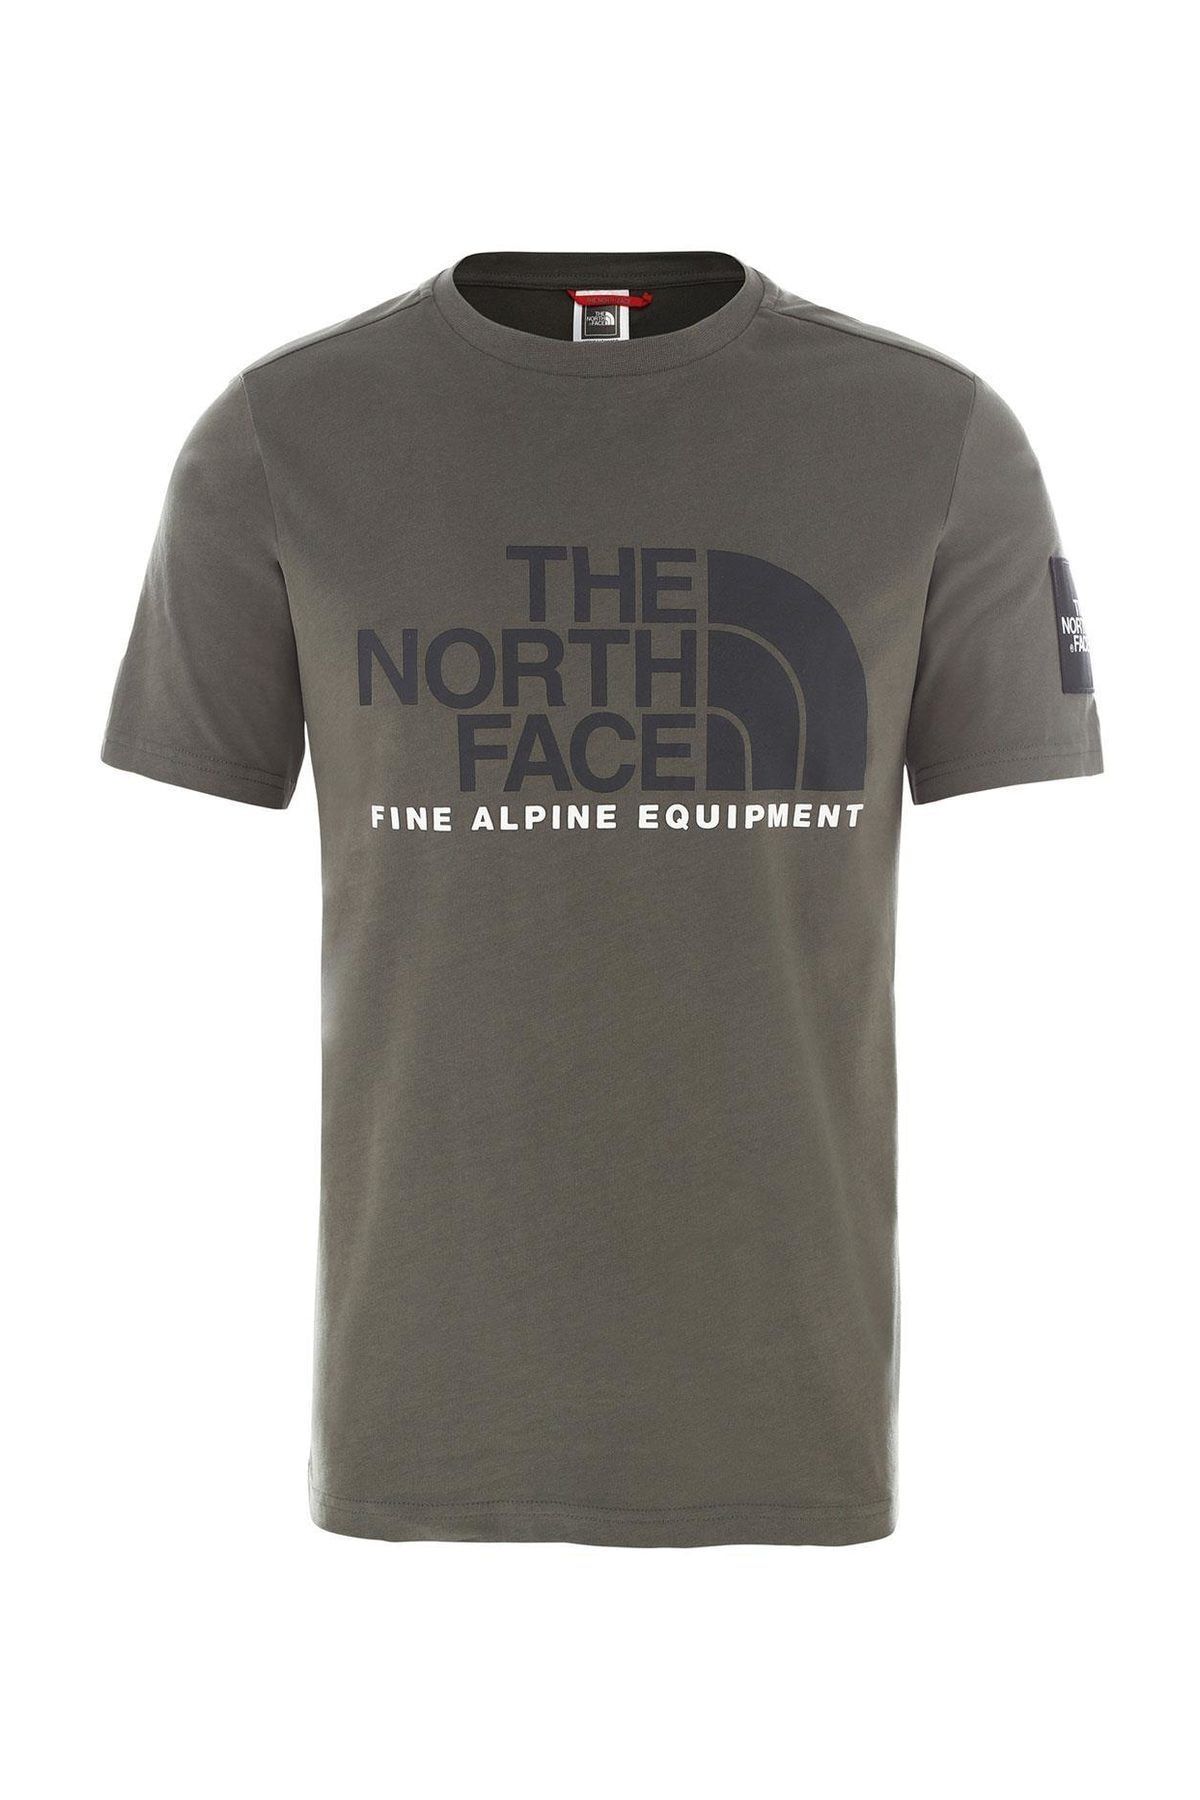 The North Face The Northface Erkek S/S FINE ALPINE Tişört2 - EU NF0A4M6NBQW1